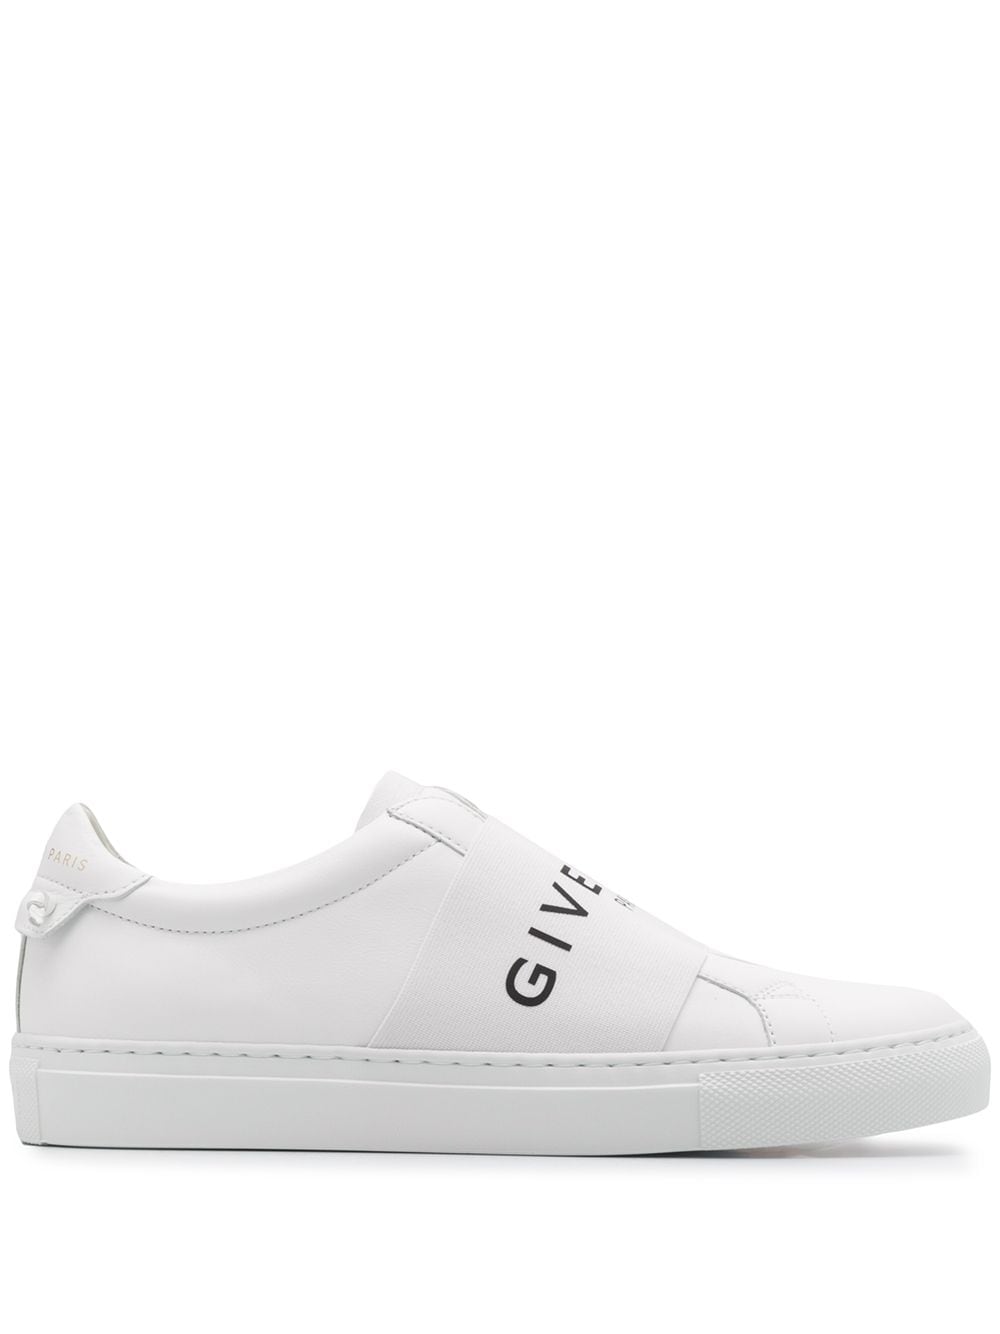 Urban Street Leather Sneakera дамски обувки Givenchy 840974390_36